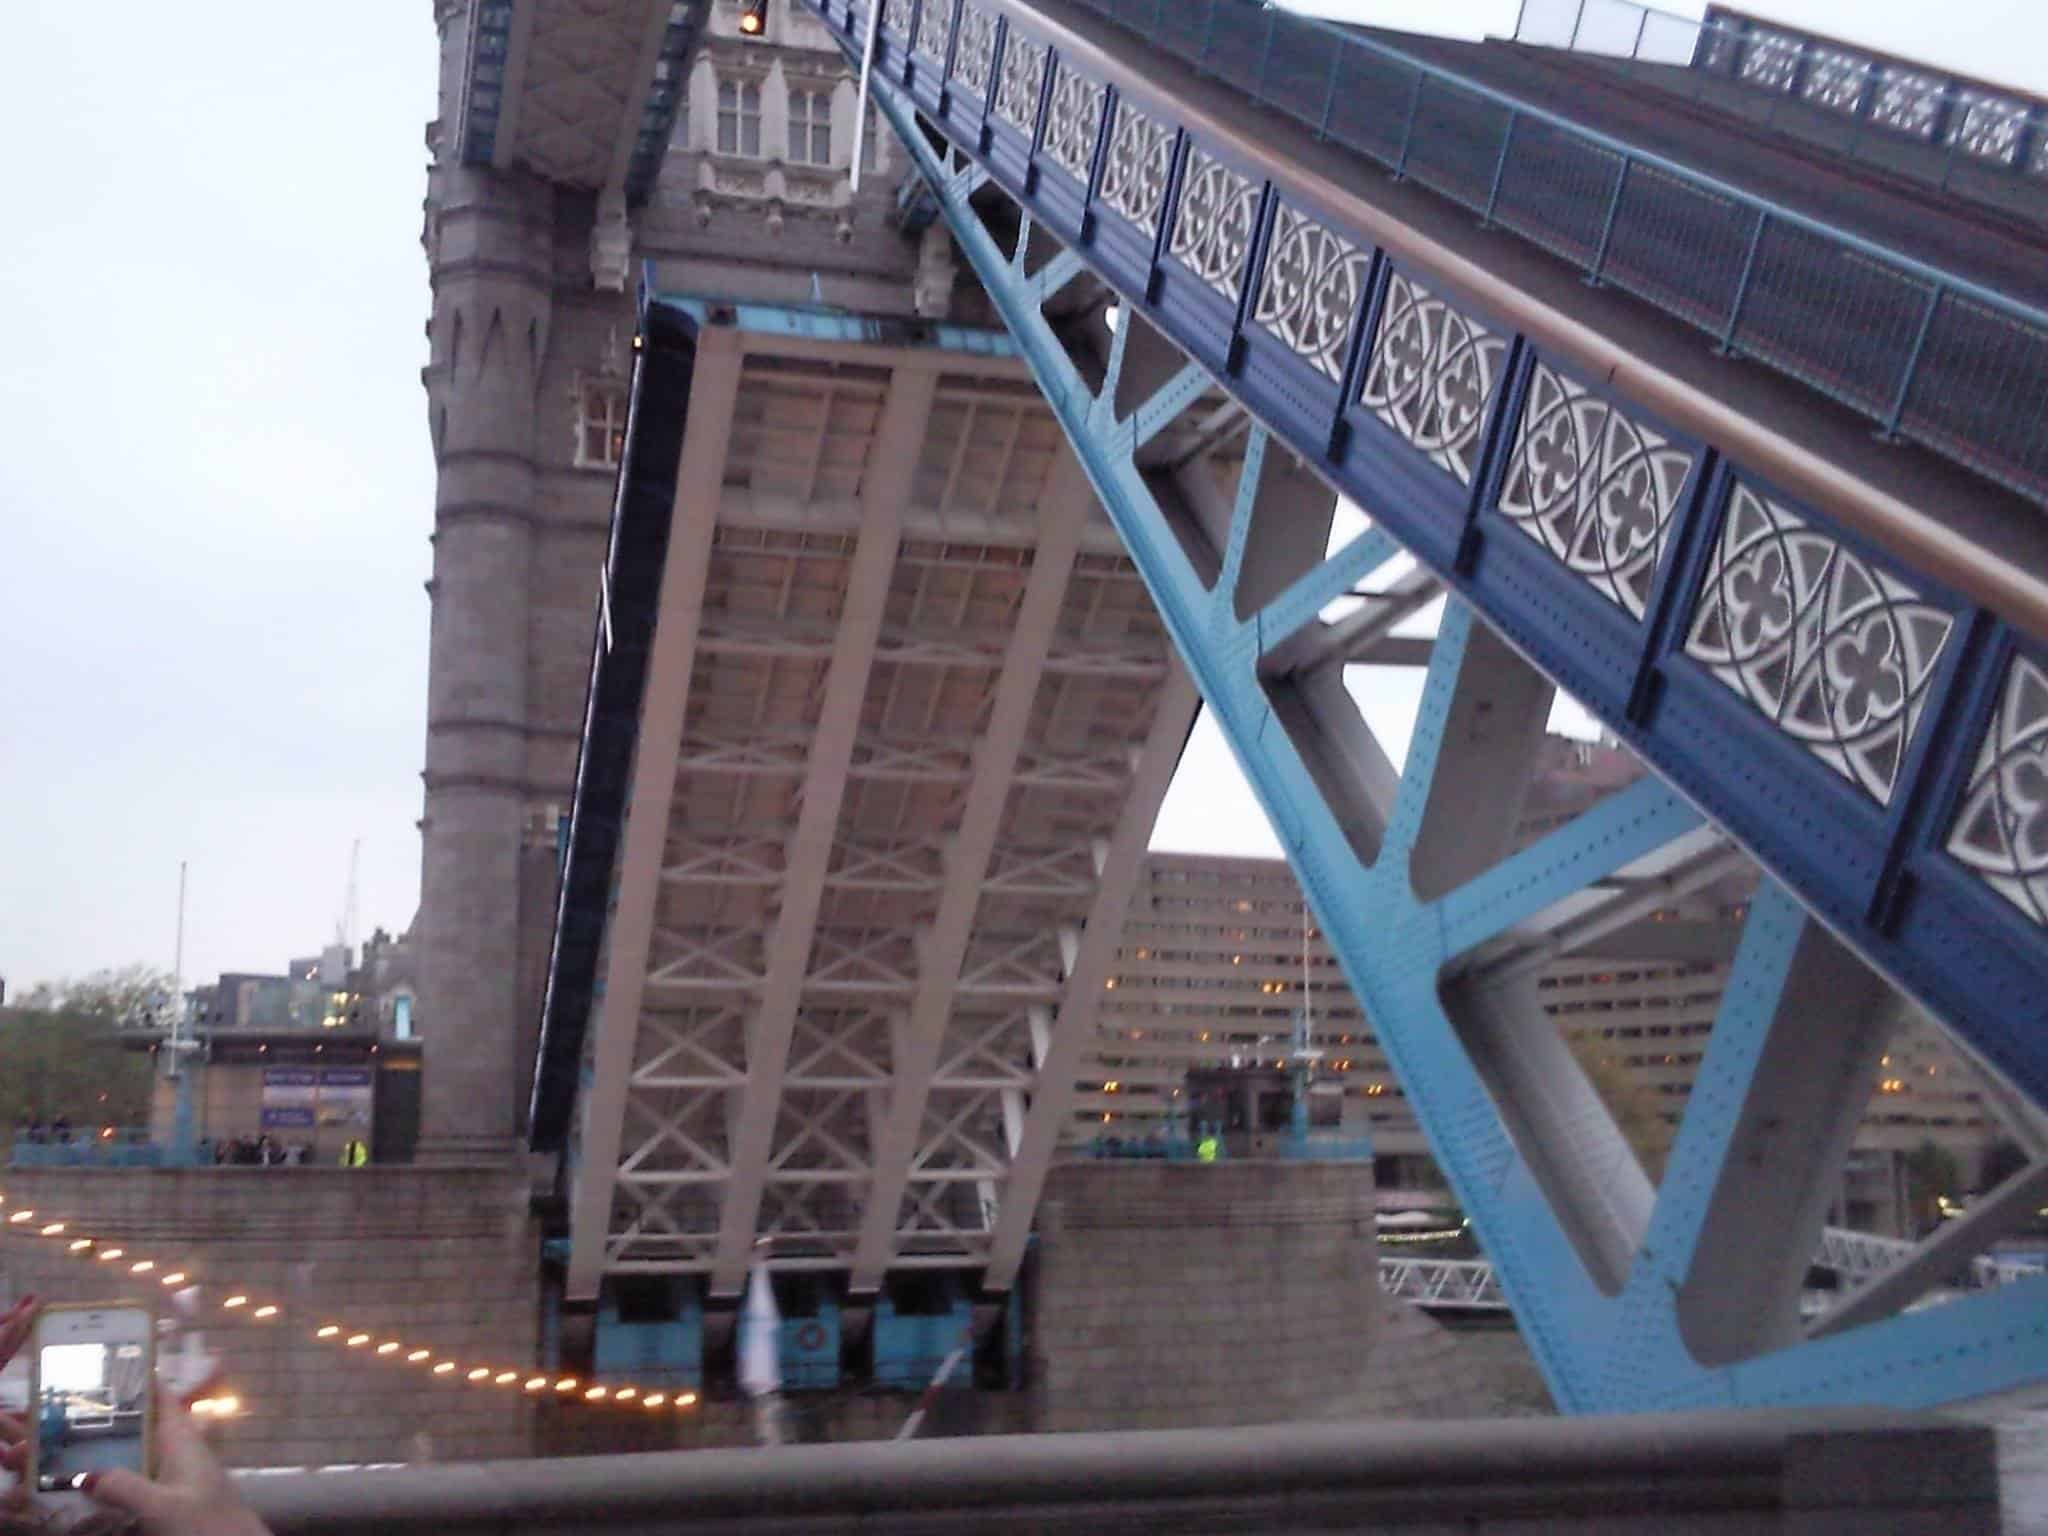 Tower Bridge opening